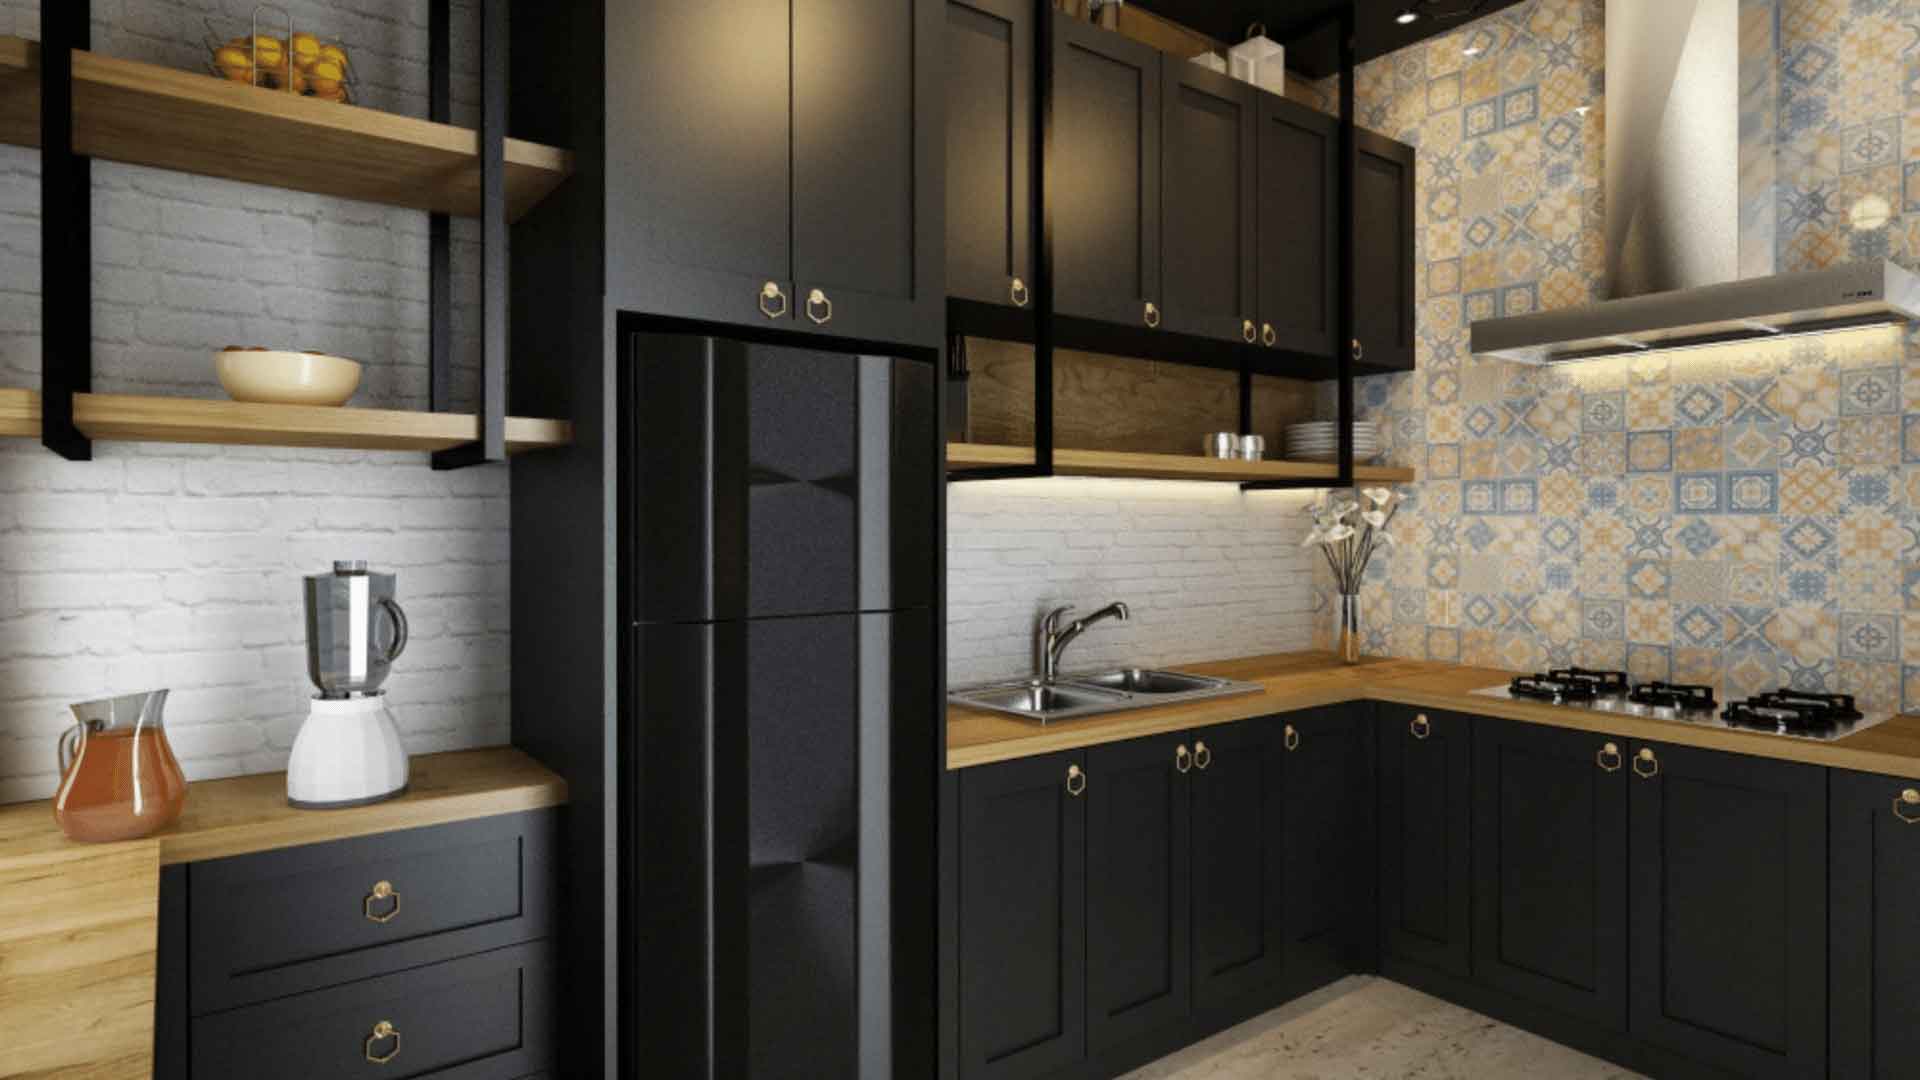 Our Designs - kitchen remodeling atlanta